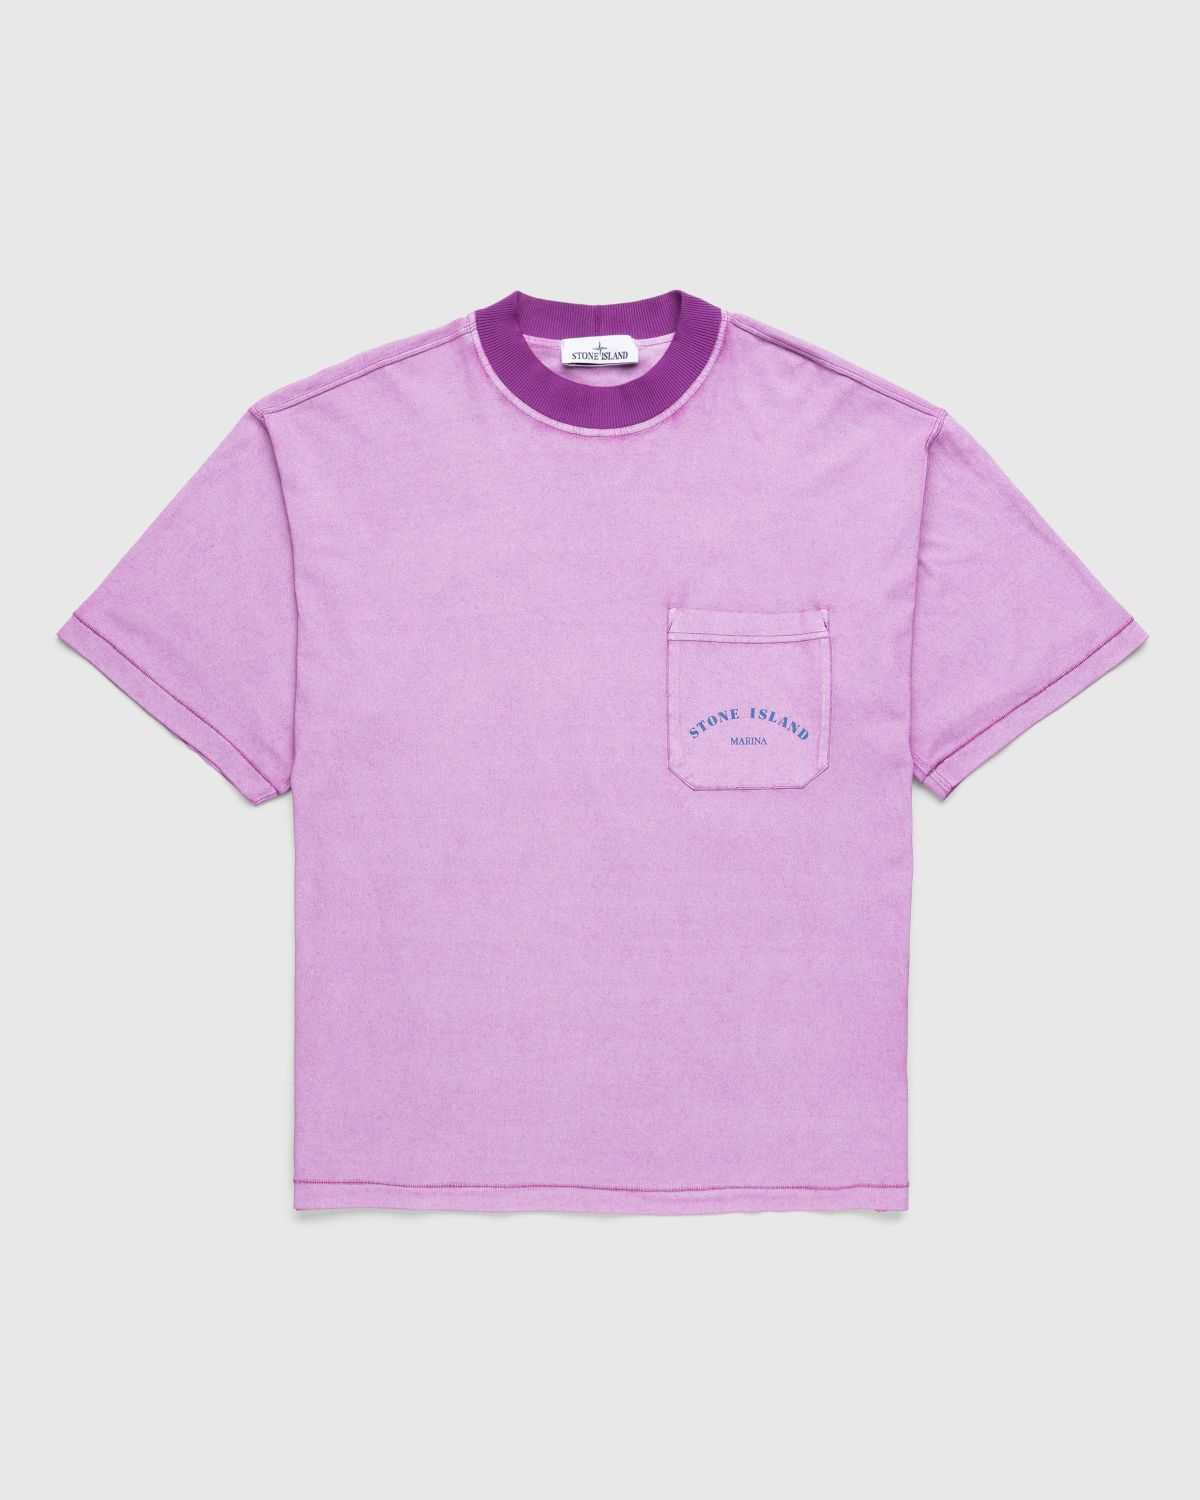 Stone Island – T-Shirt Pink 216X4 | Highsnobiety Shop